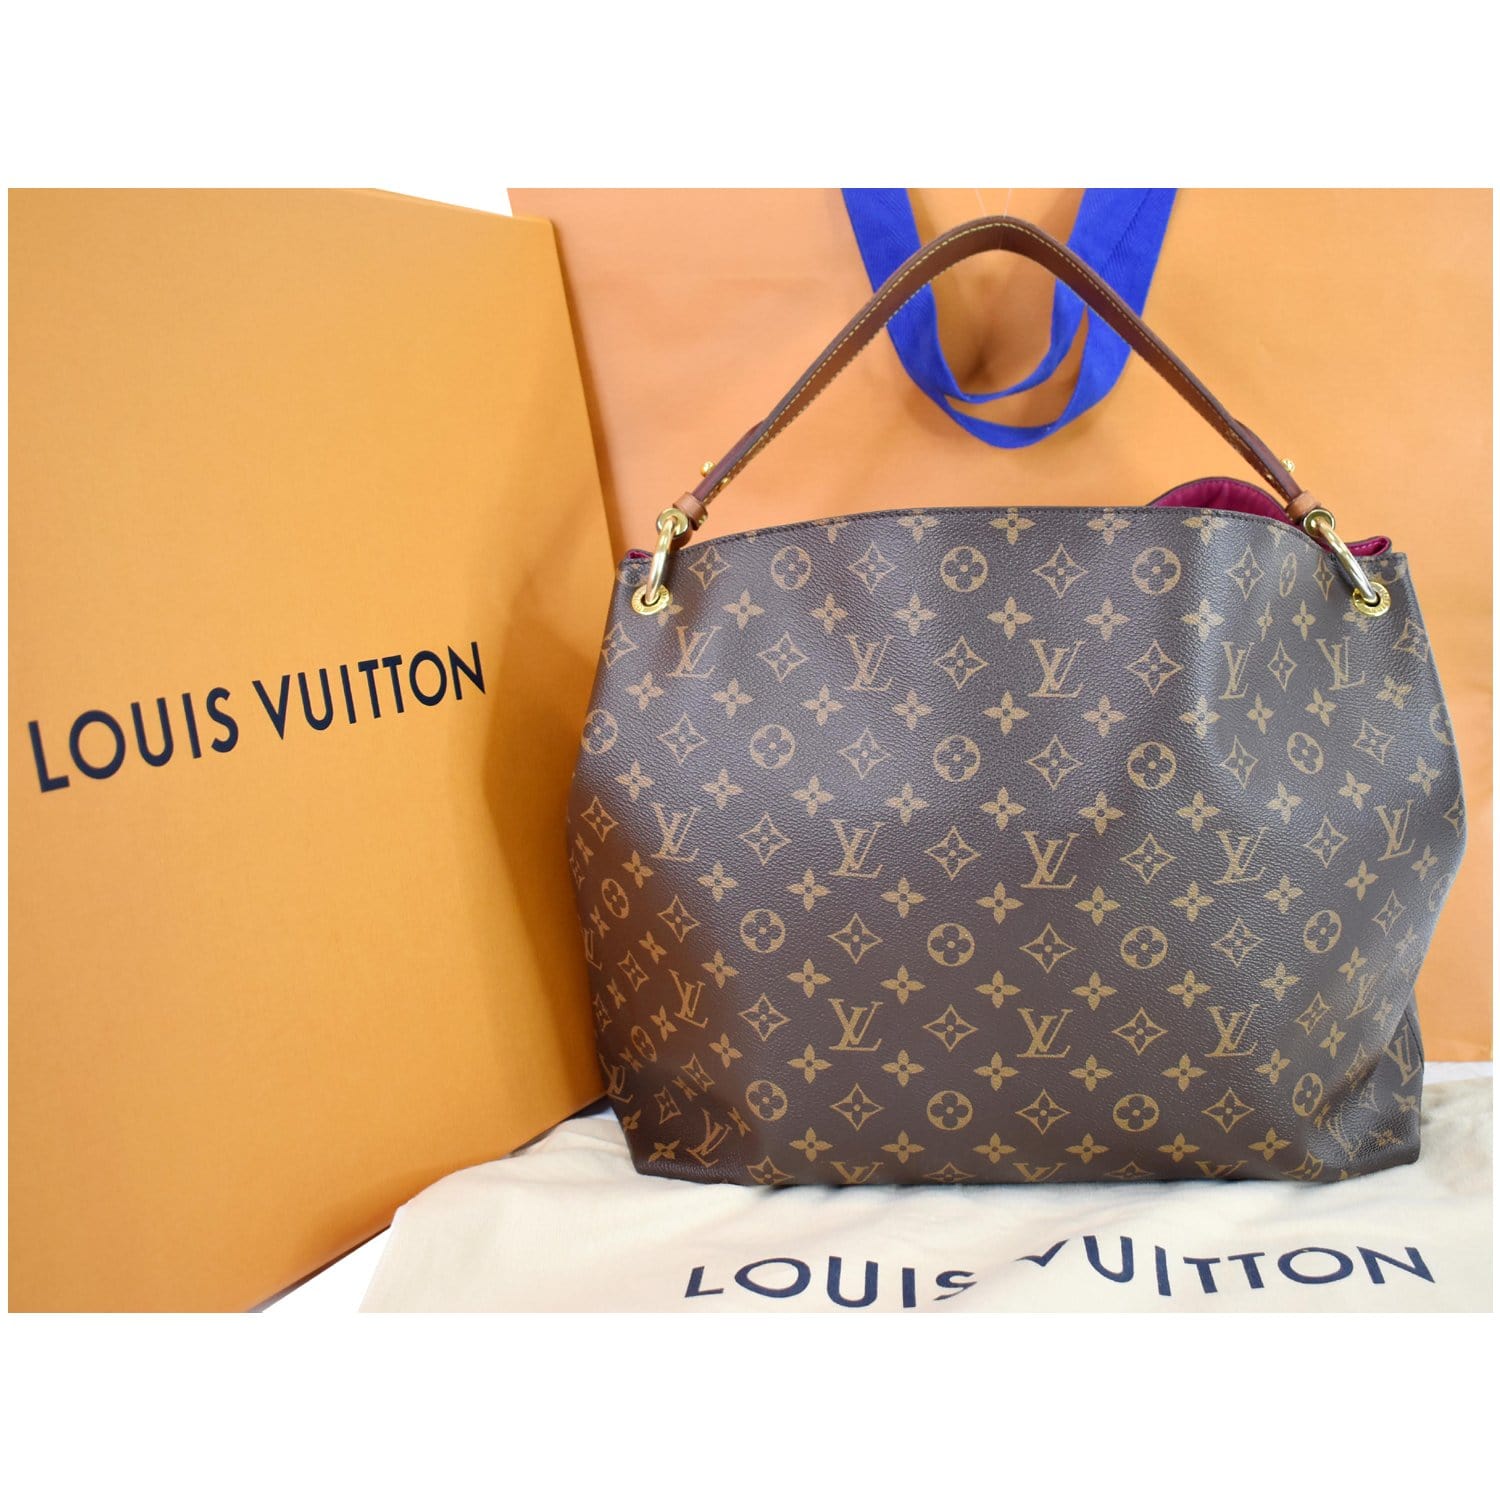 Preowned Authentic Louis Vuitton Monogram Graceful MM